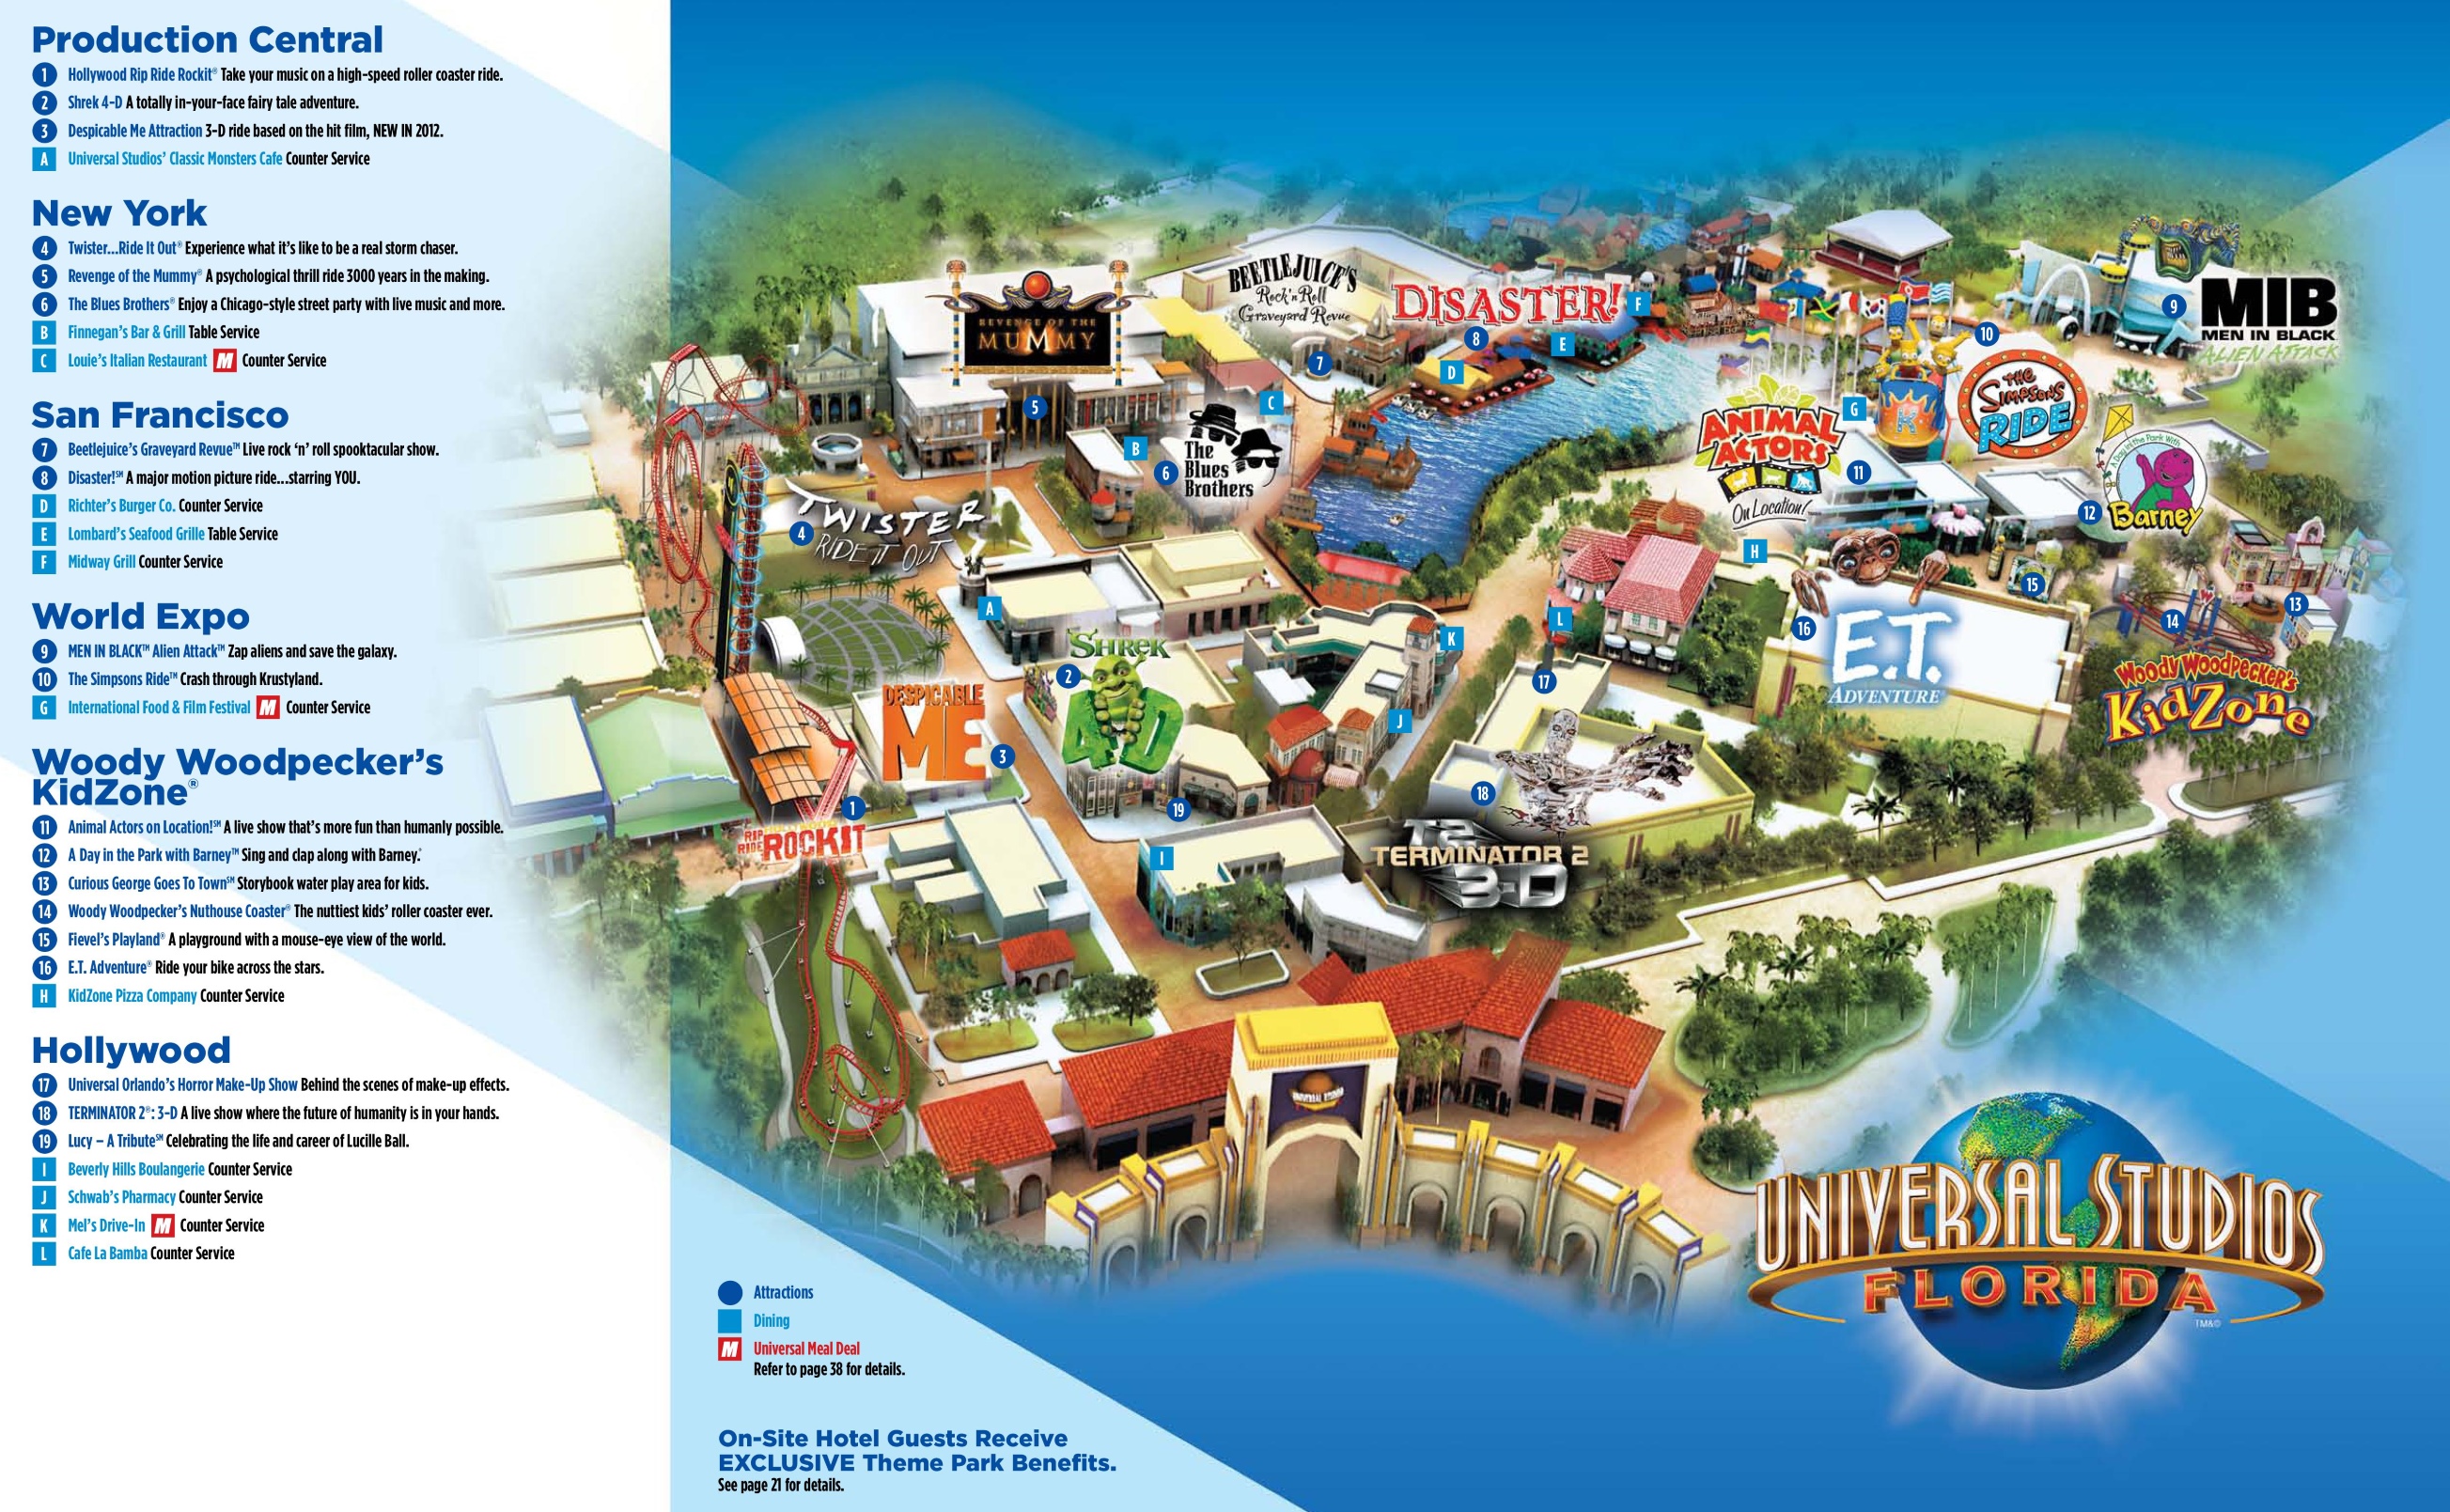 Orlando Universal Studios Florida Map